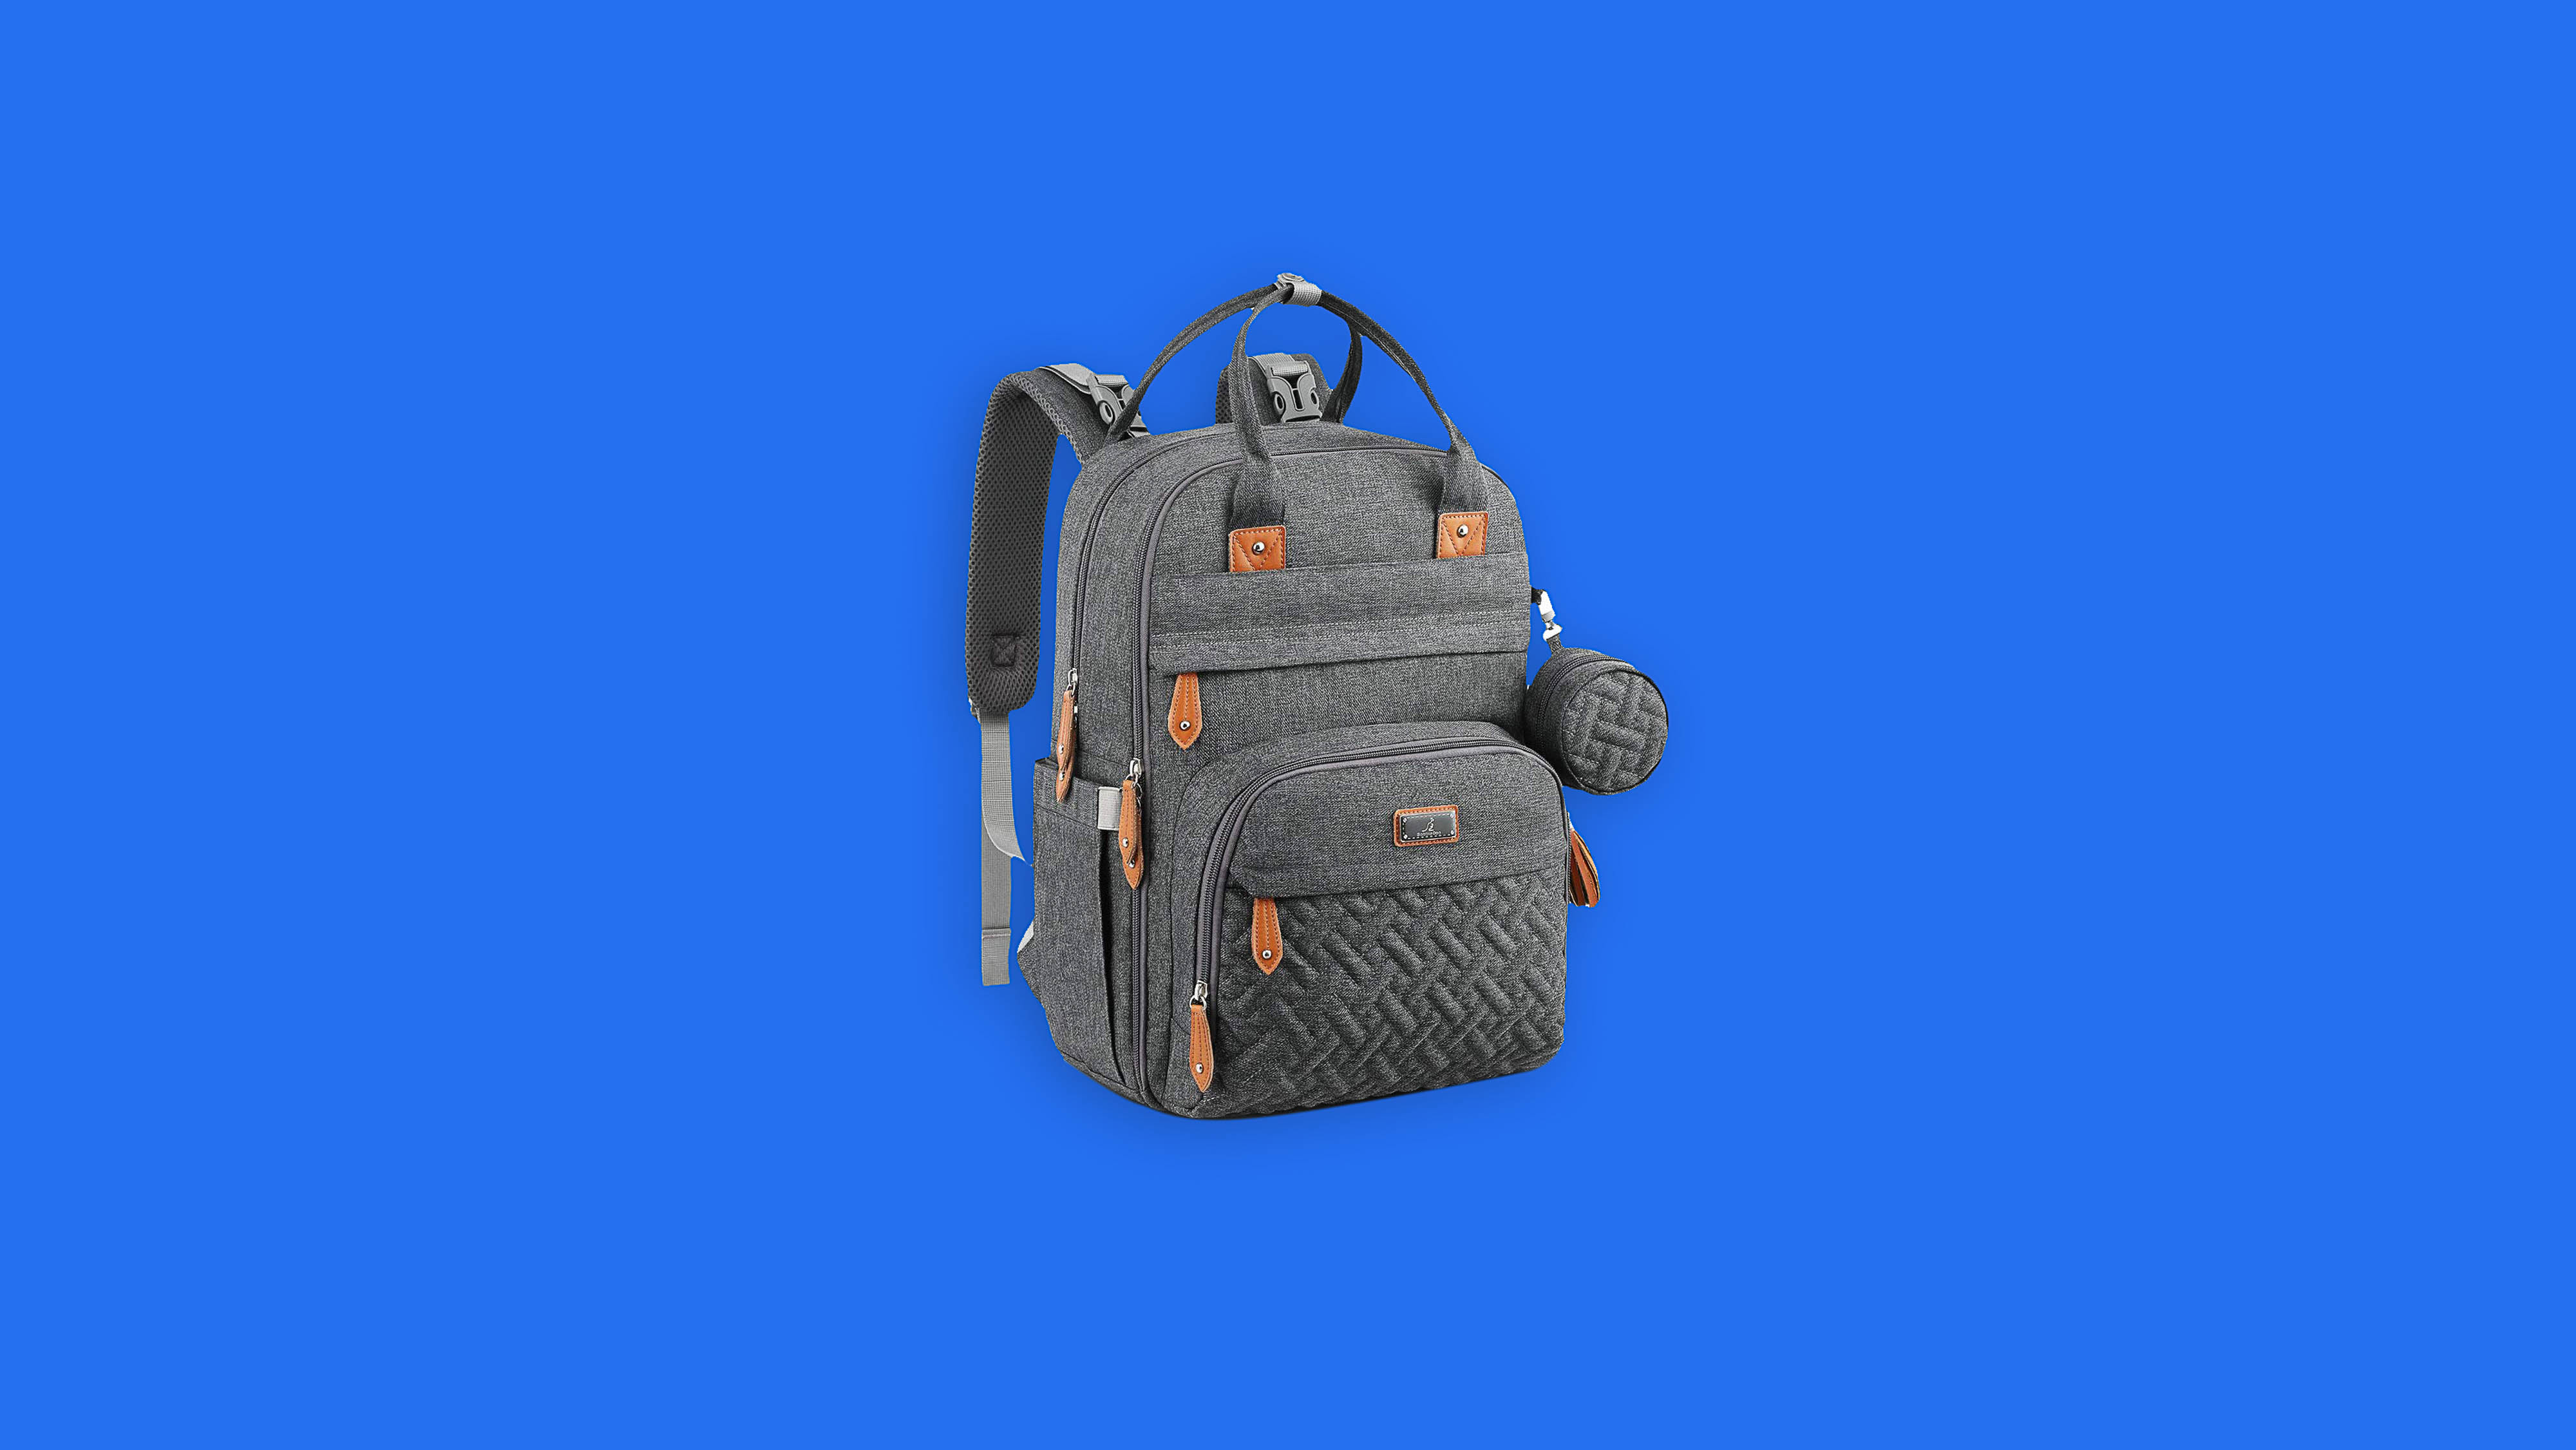 3 in 1 Portable Diaper Bag Backpack Multifunctional Baby Travel